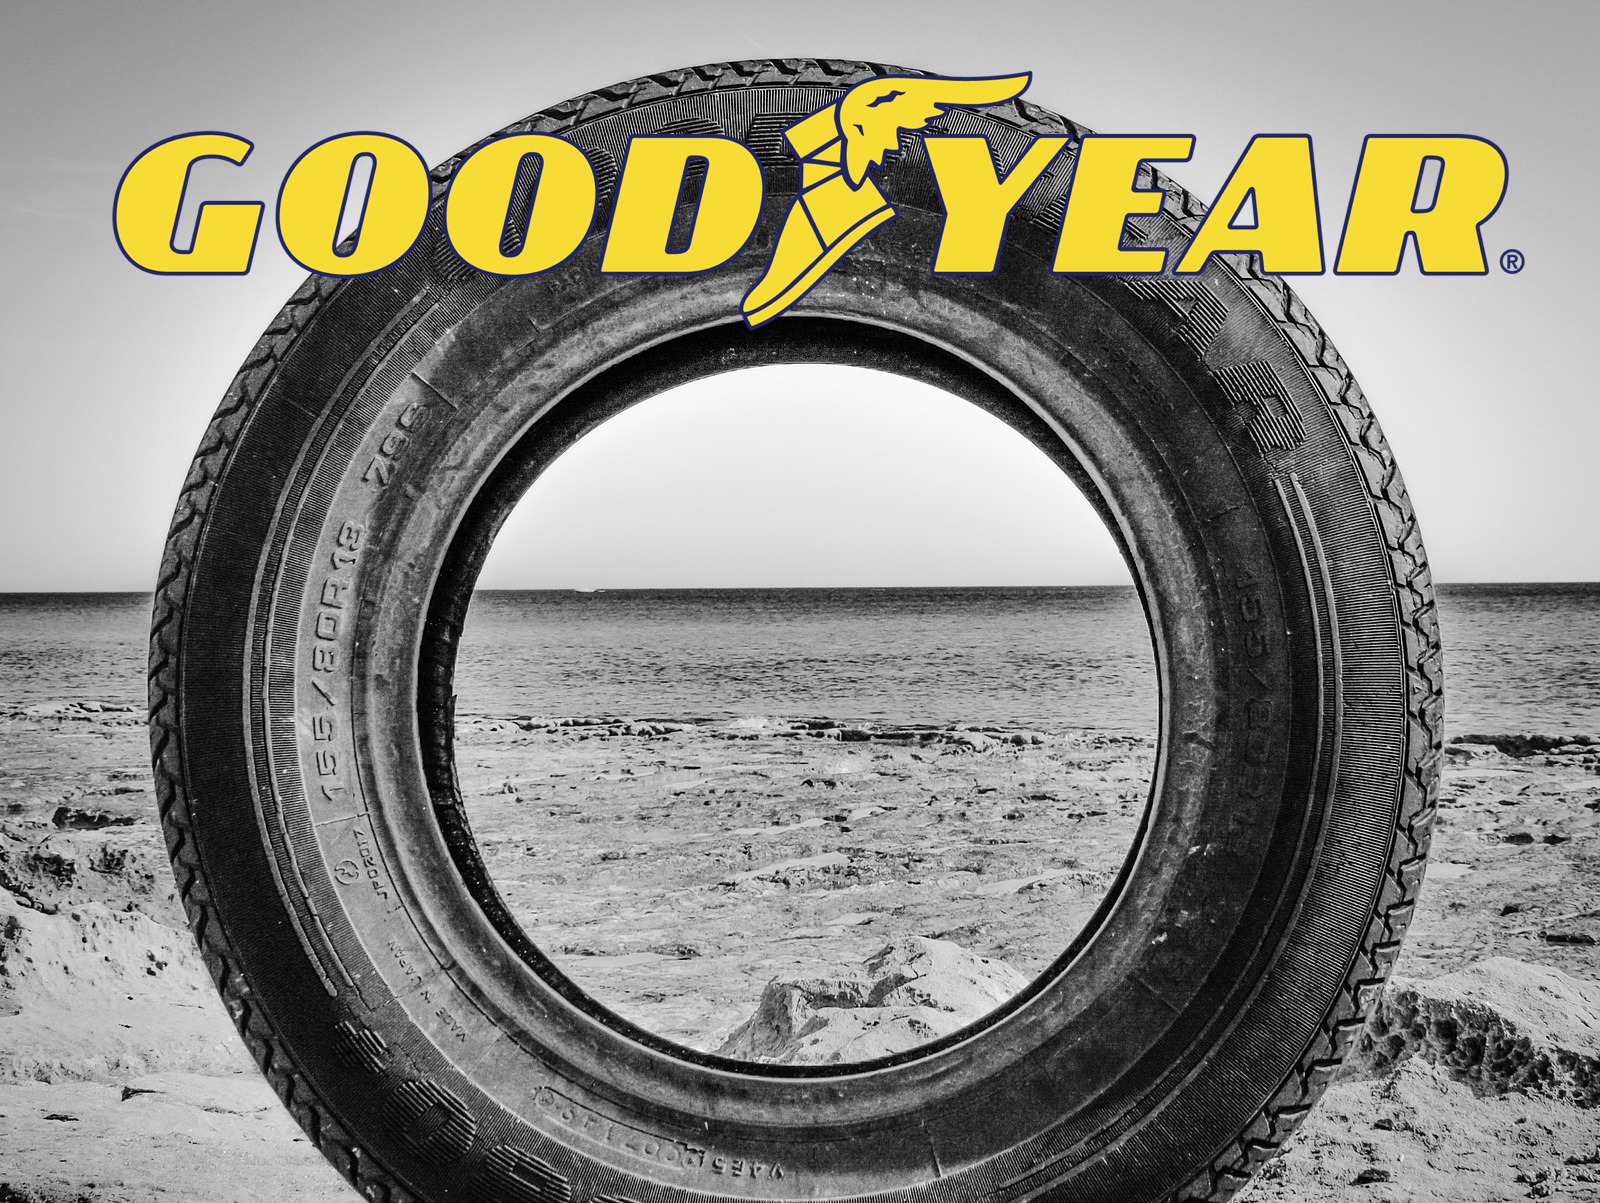 Taking The Wheel: ‘Goodyear’ Tires